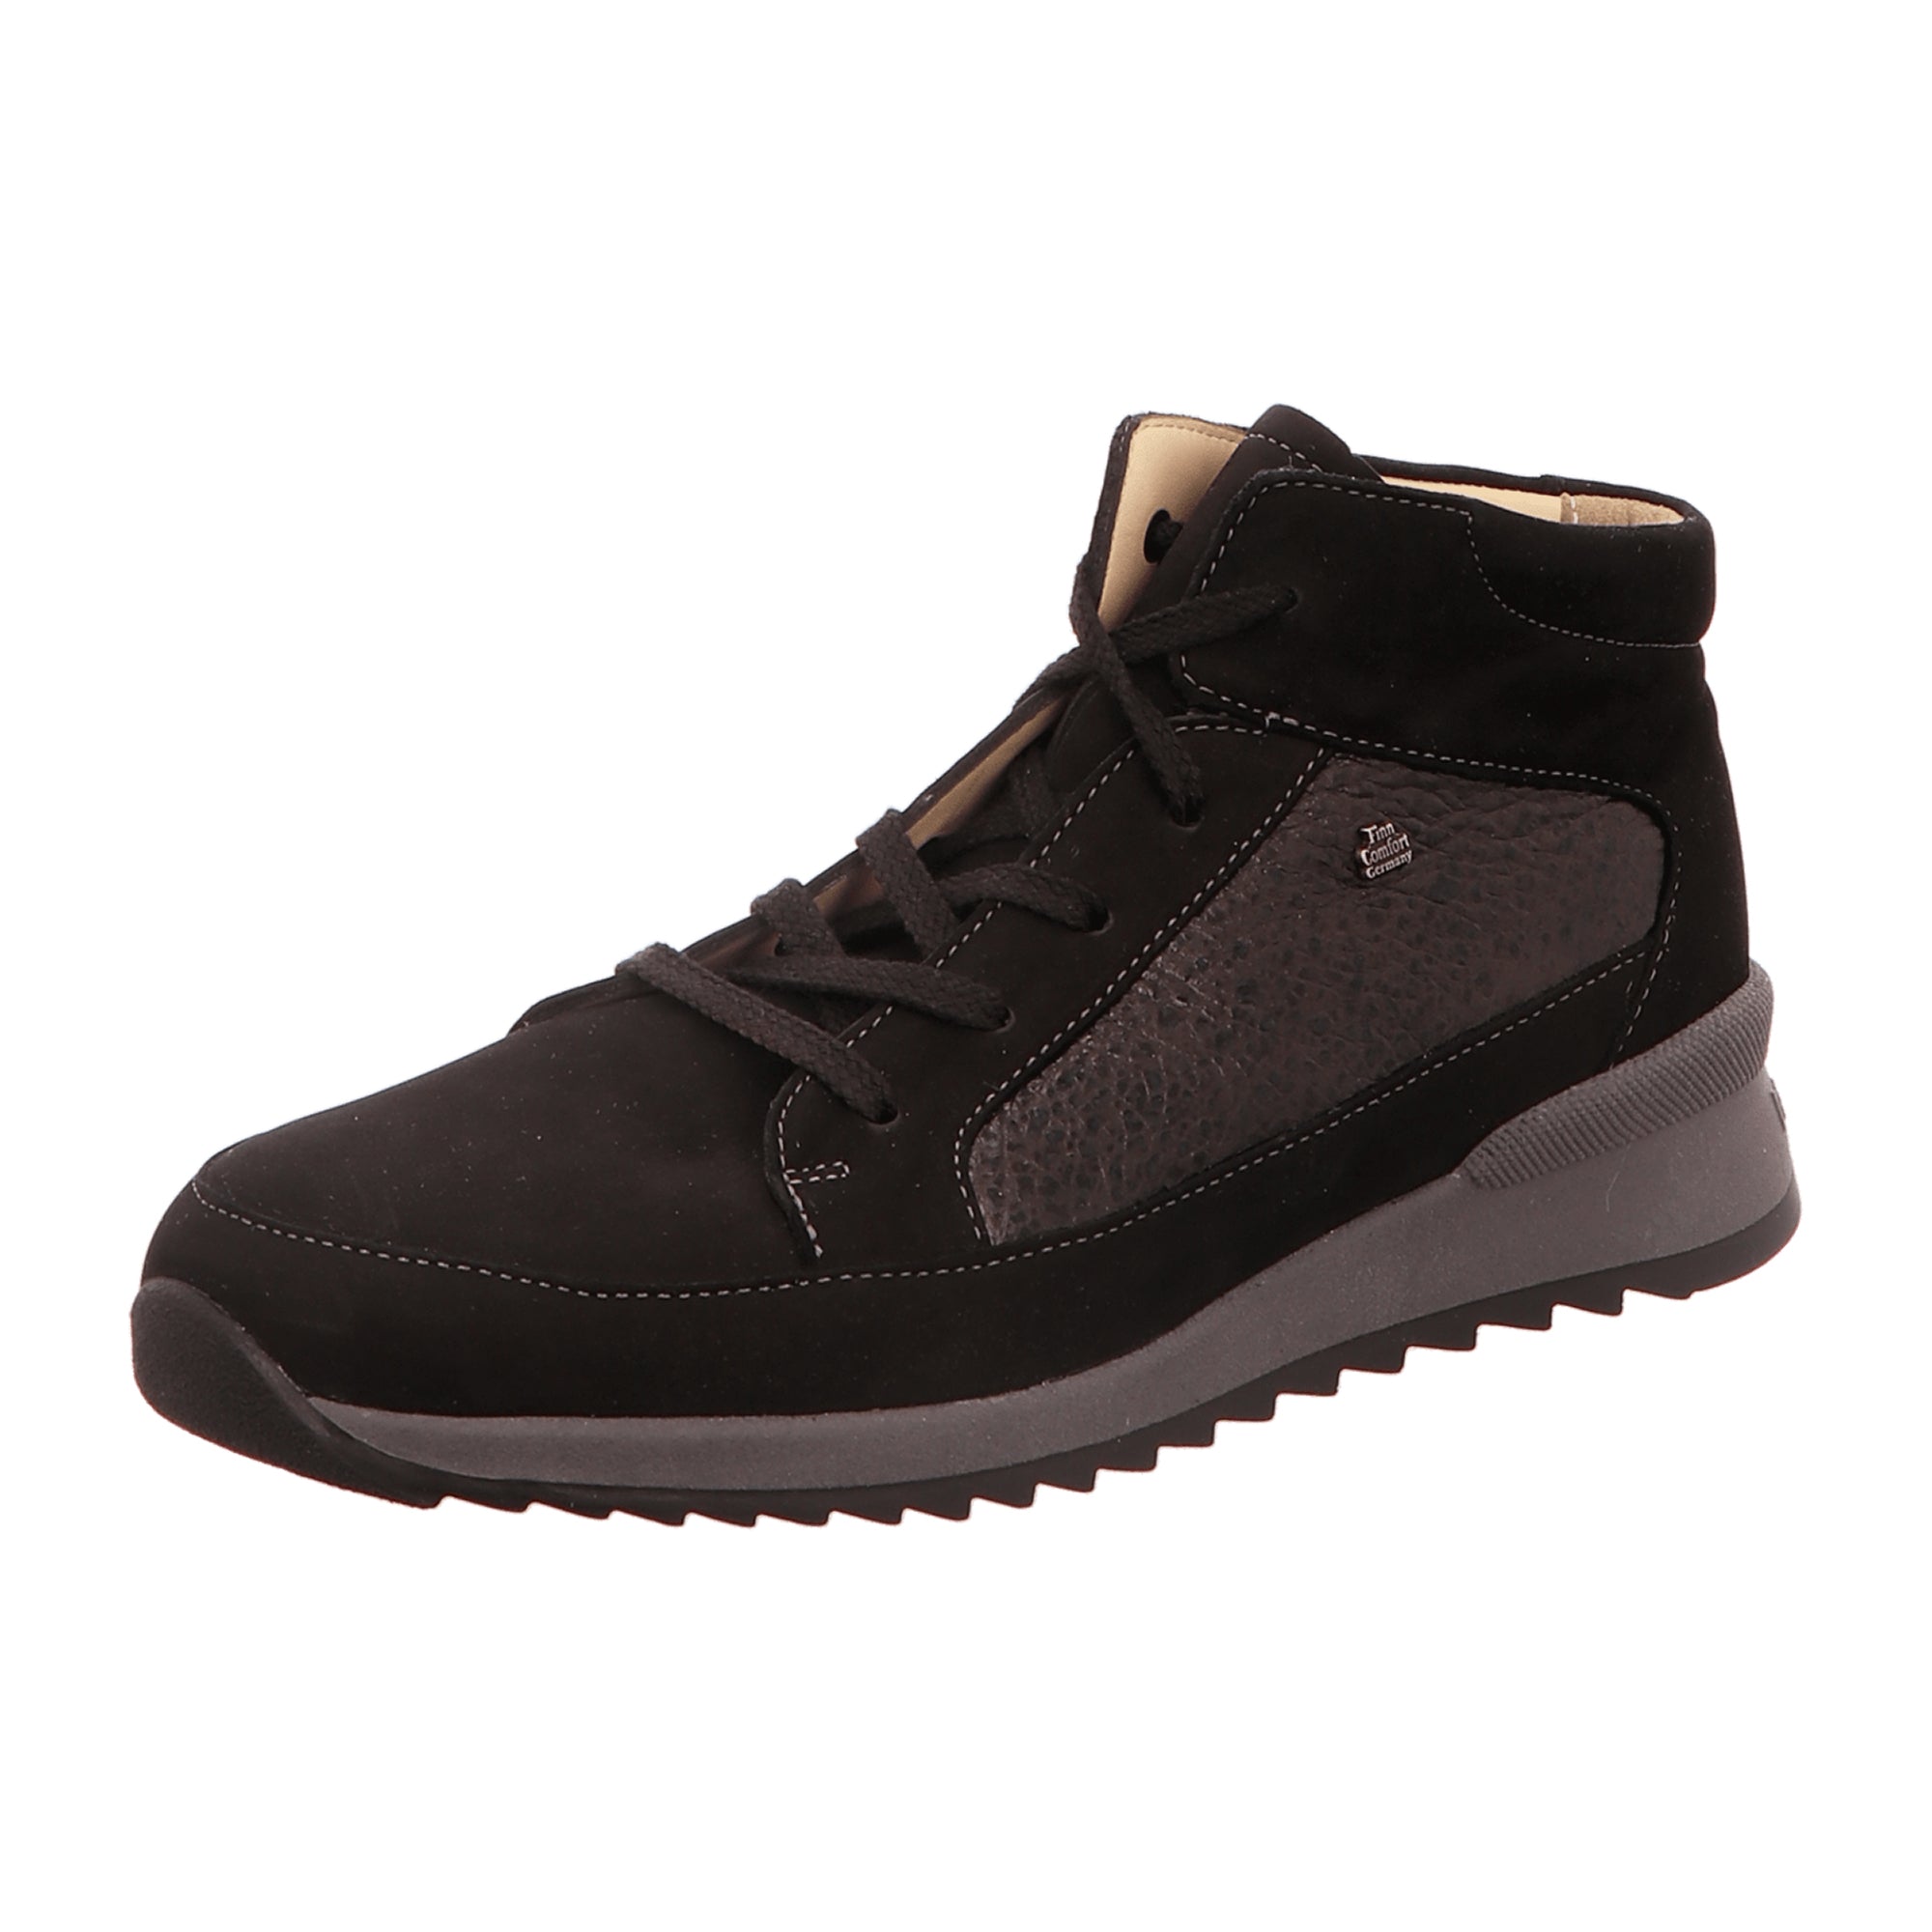 Finn Comfort Burley Damen Shoes – Stylish & Durable Brown Leather